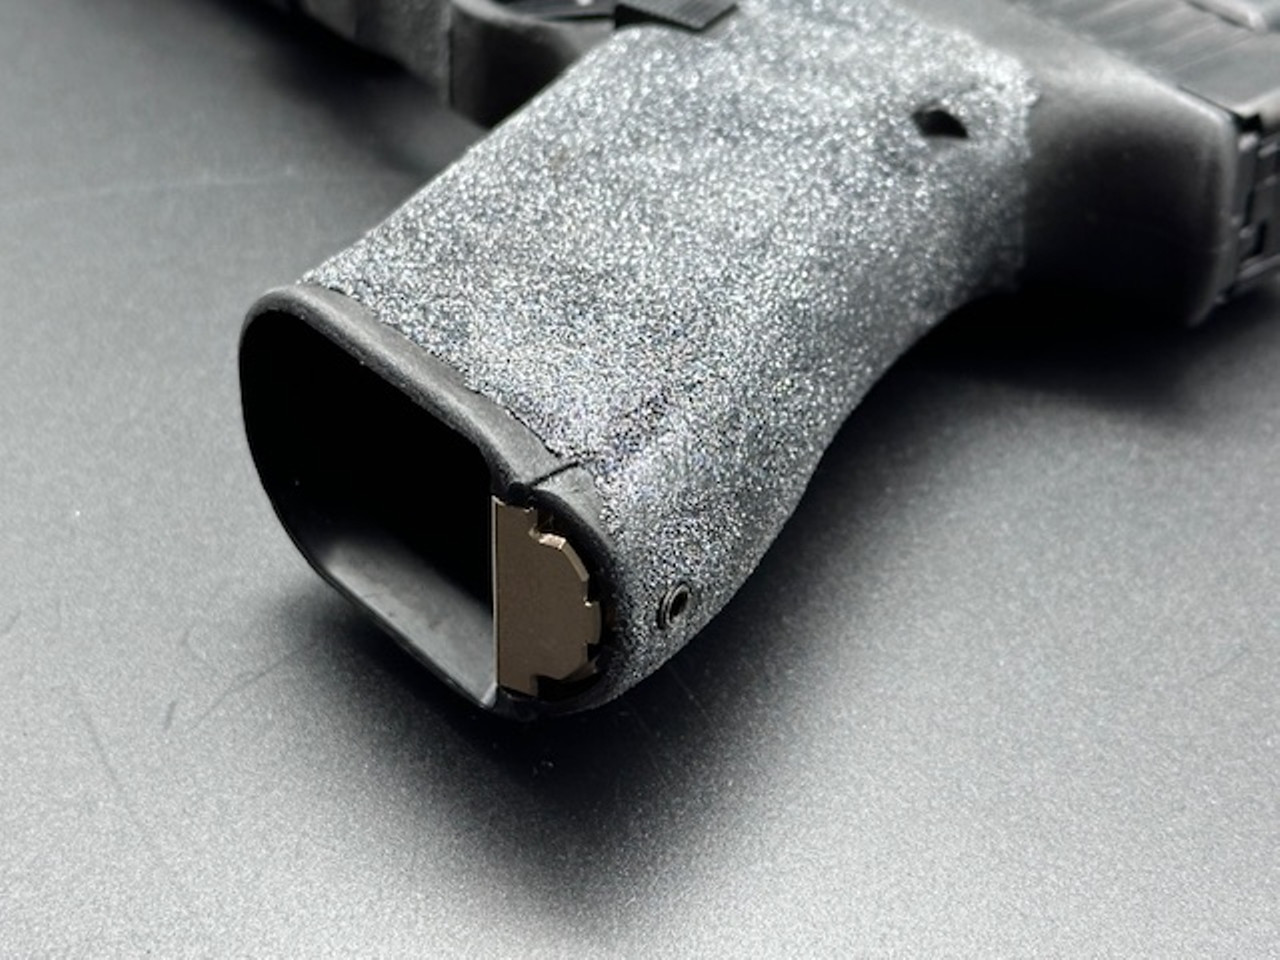 MDX Arms Brass Grip Plug (BGP) for G17 Size Gen 4-5 Pistol Frame installed on G17 Gen5